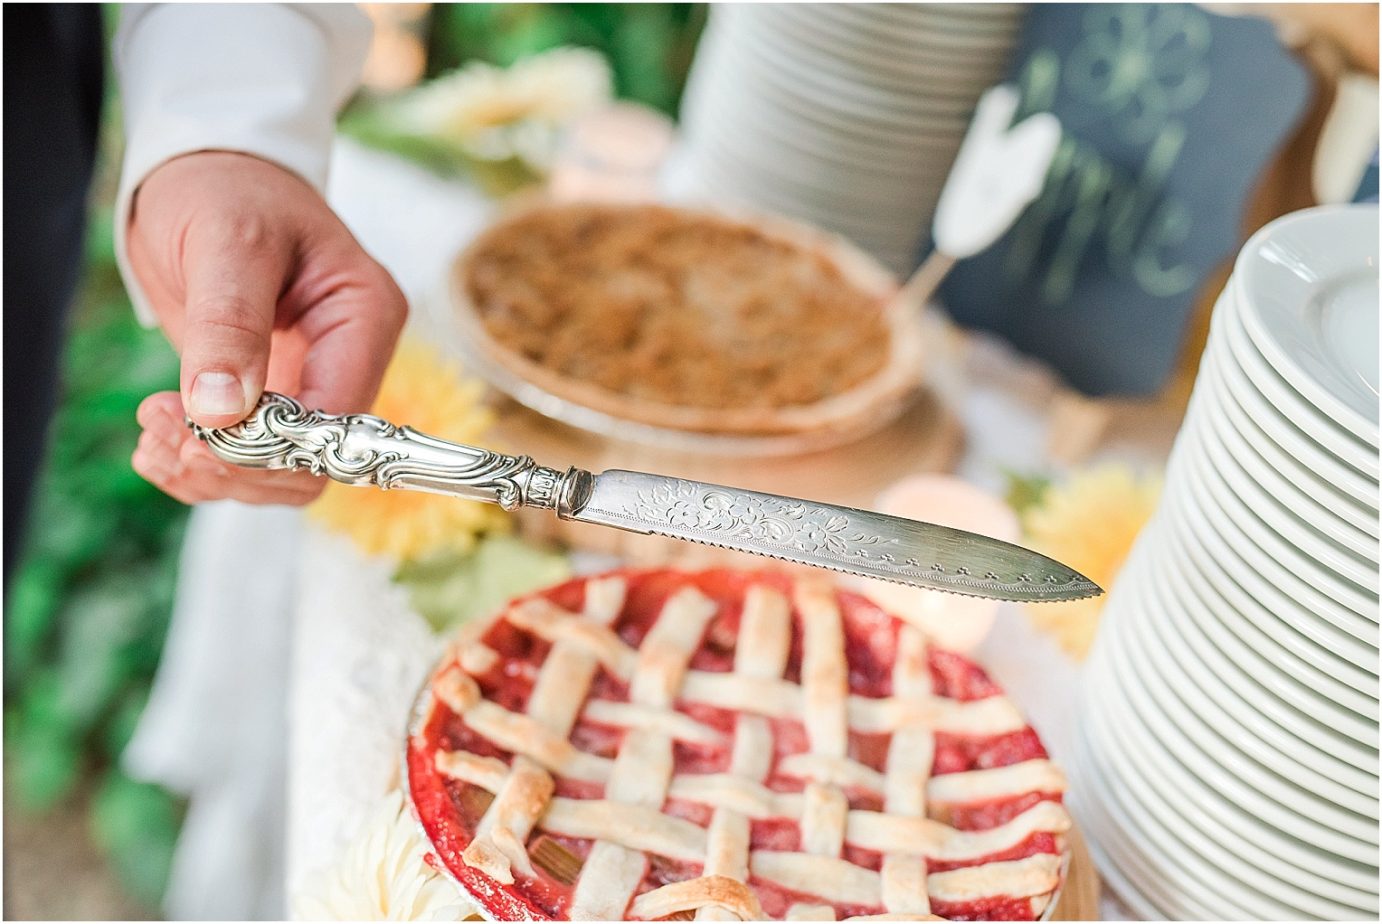 Warm Springs Inn Wedding Wenatchee WA Dana and Terri Cake cutting knife from generations back